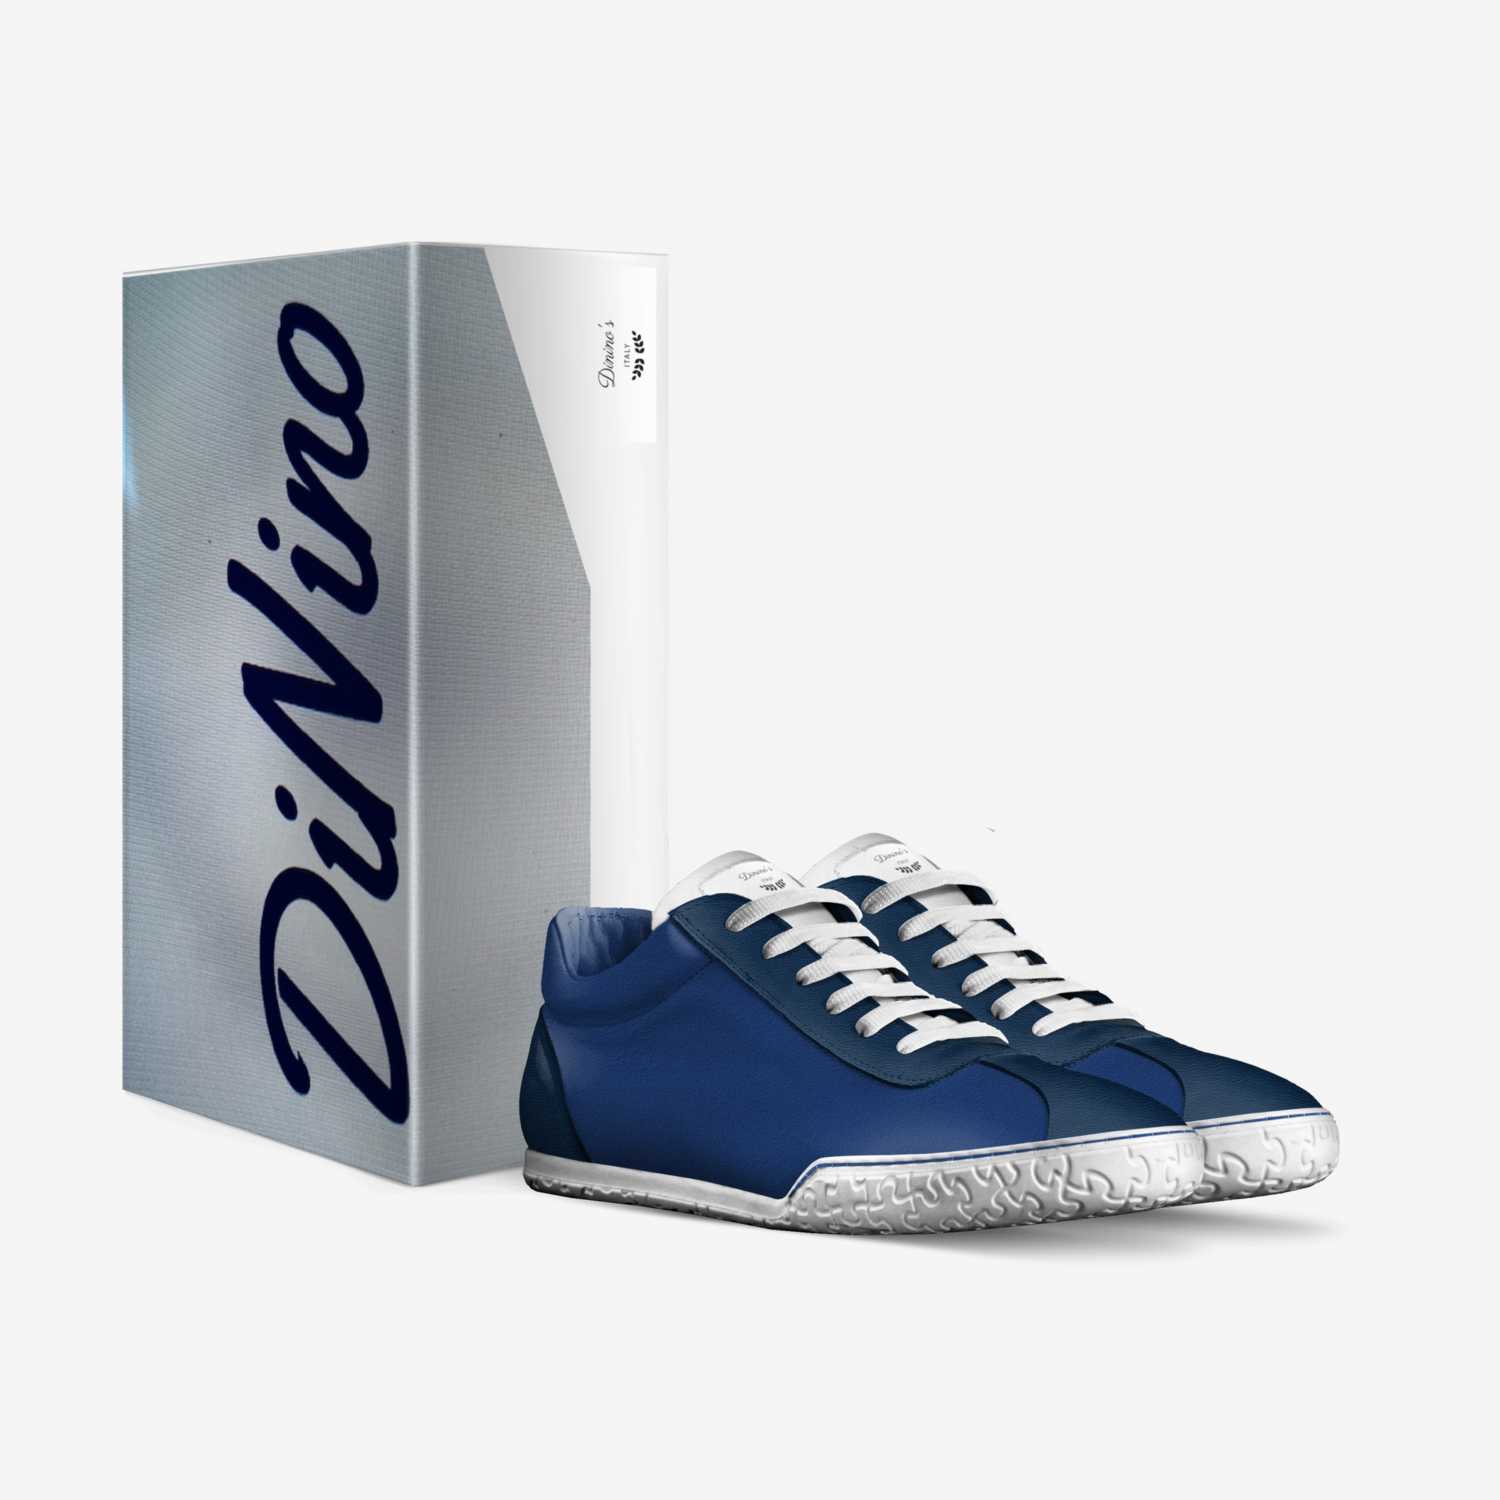 Dinino's custom made in Italy shoes by Nino Dipietro | Box view